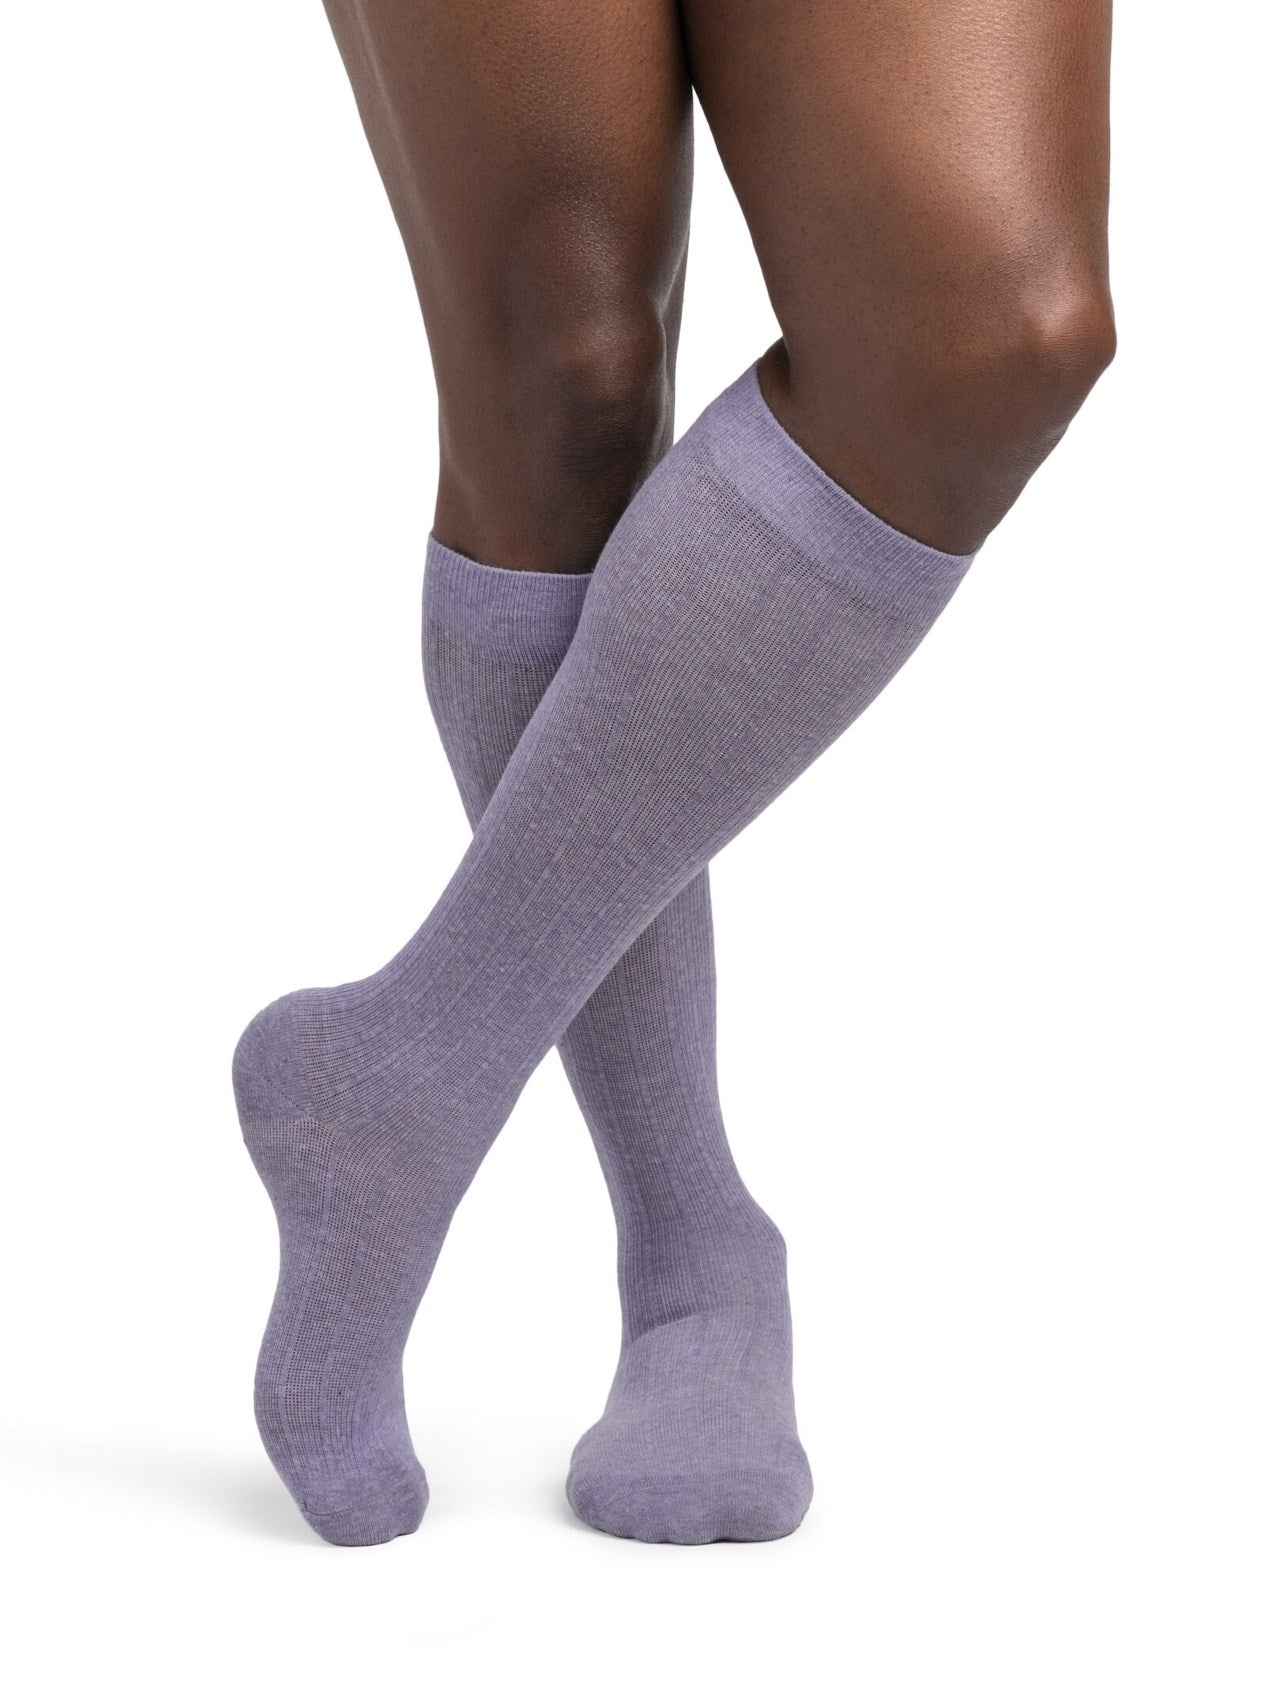 Sigvaris 190 Linen Compression Socks 15-20 mmHg Calf High For Men Closed Toe light gray 3 